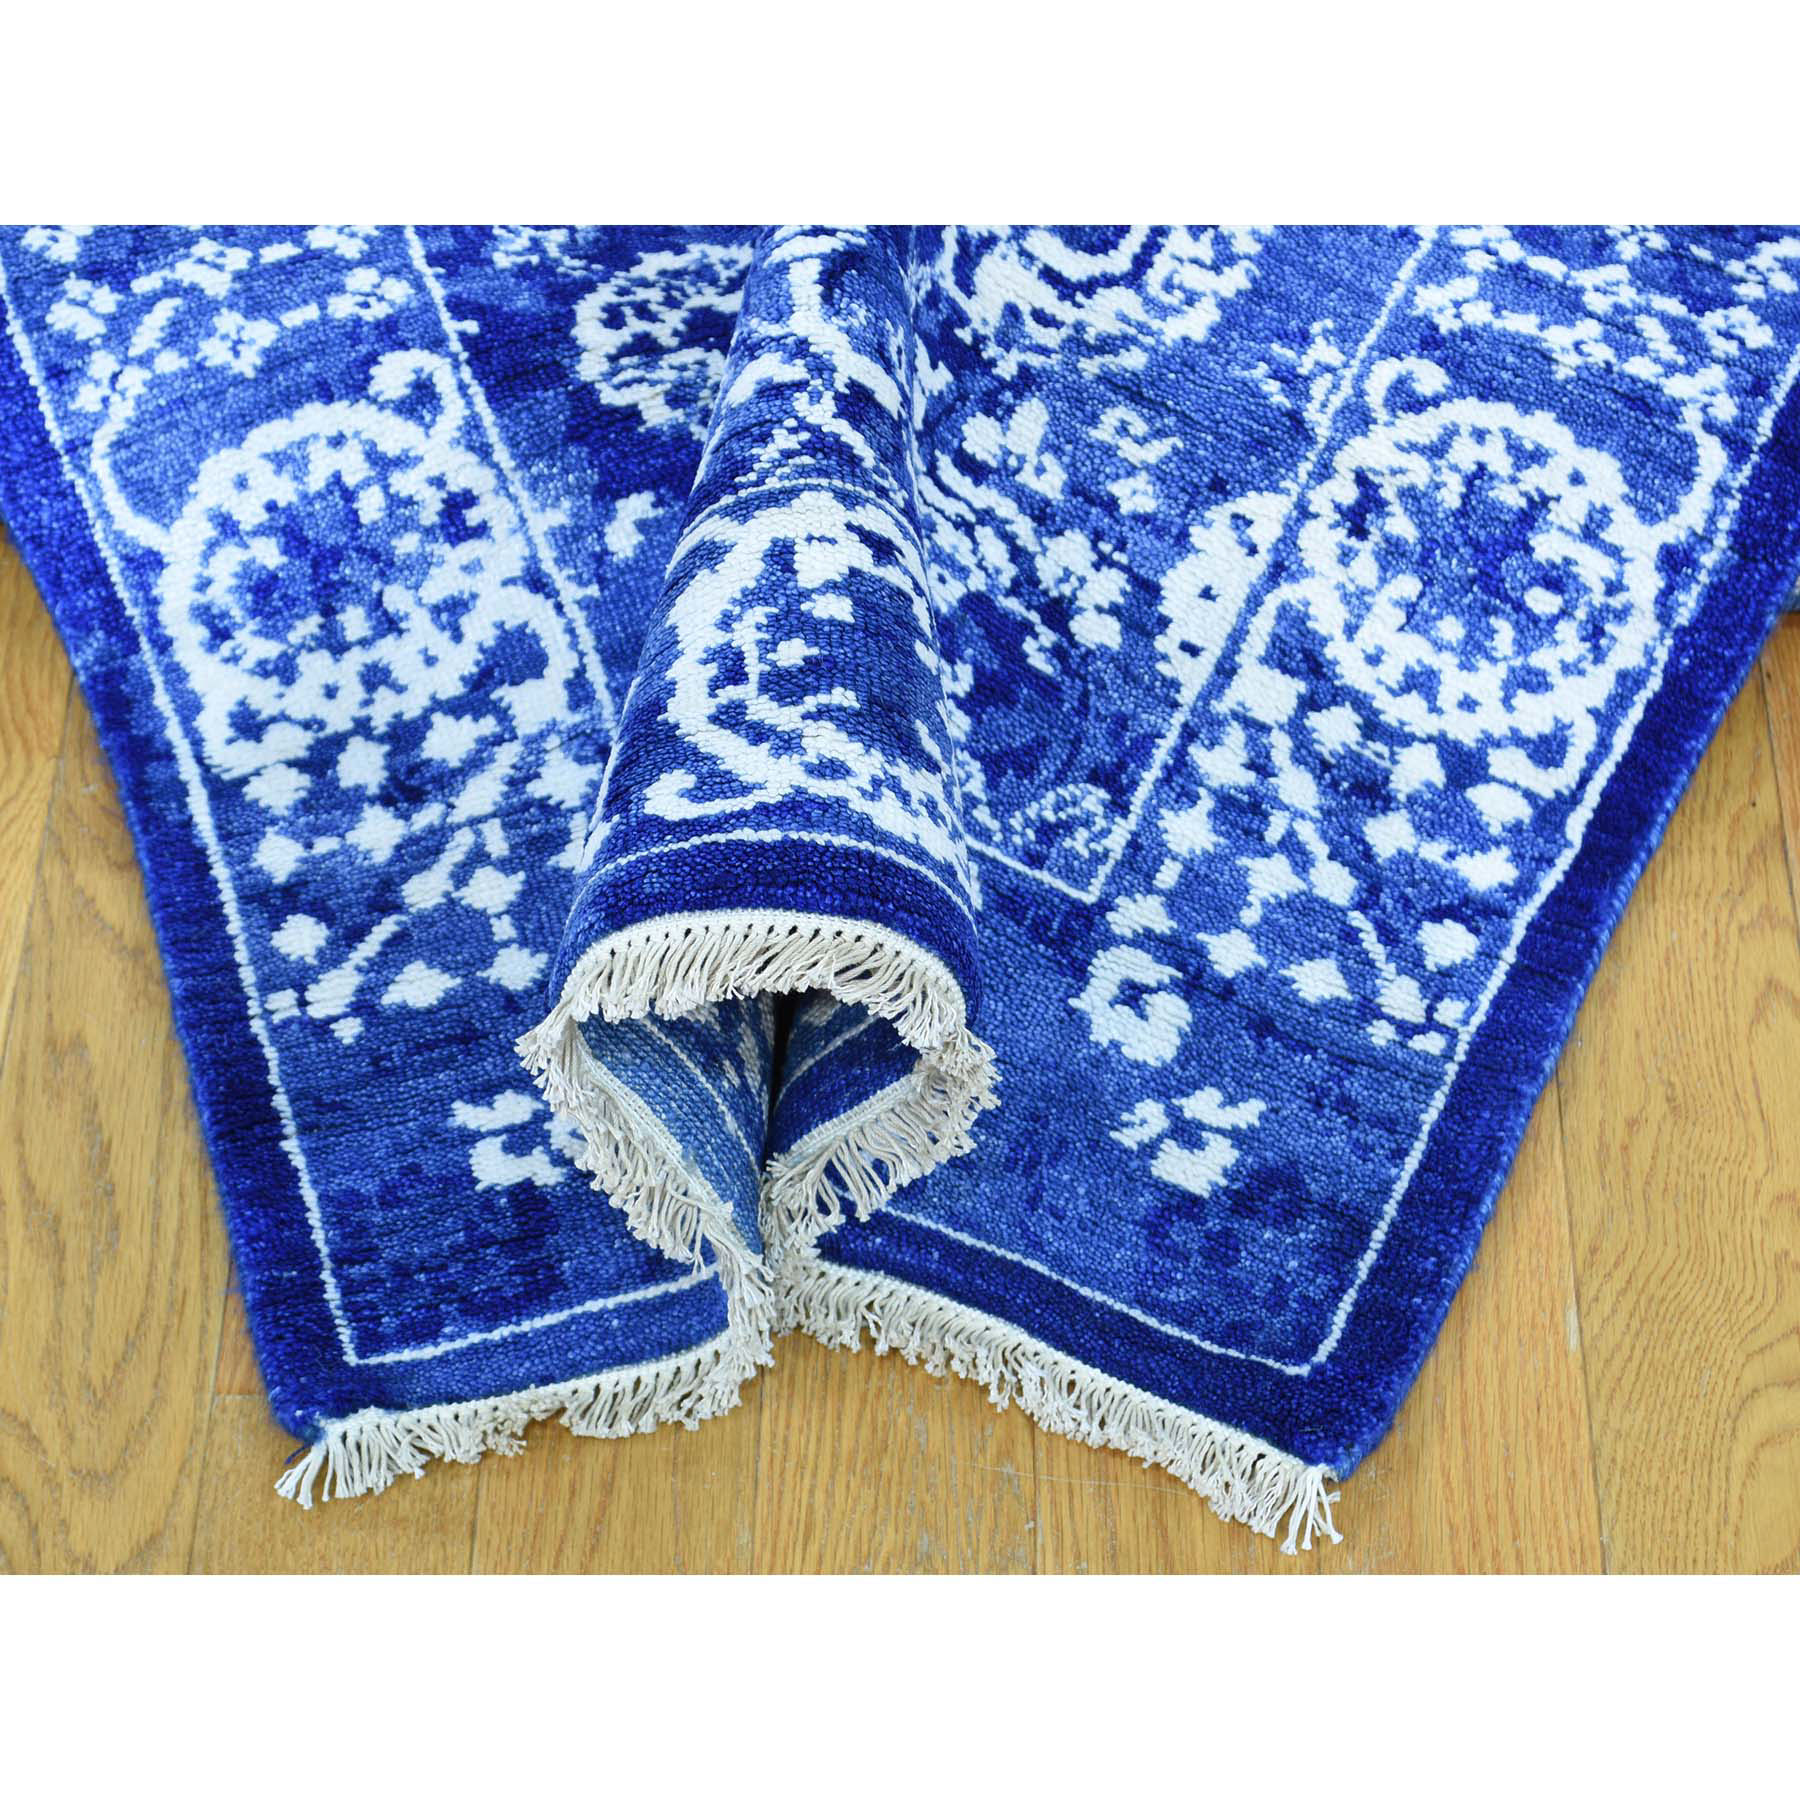 2-6 x17- Wool and Silk Tone on Tone Tabriz Handmade XL Runner Rug 